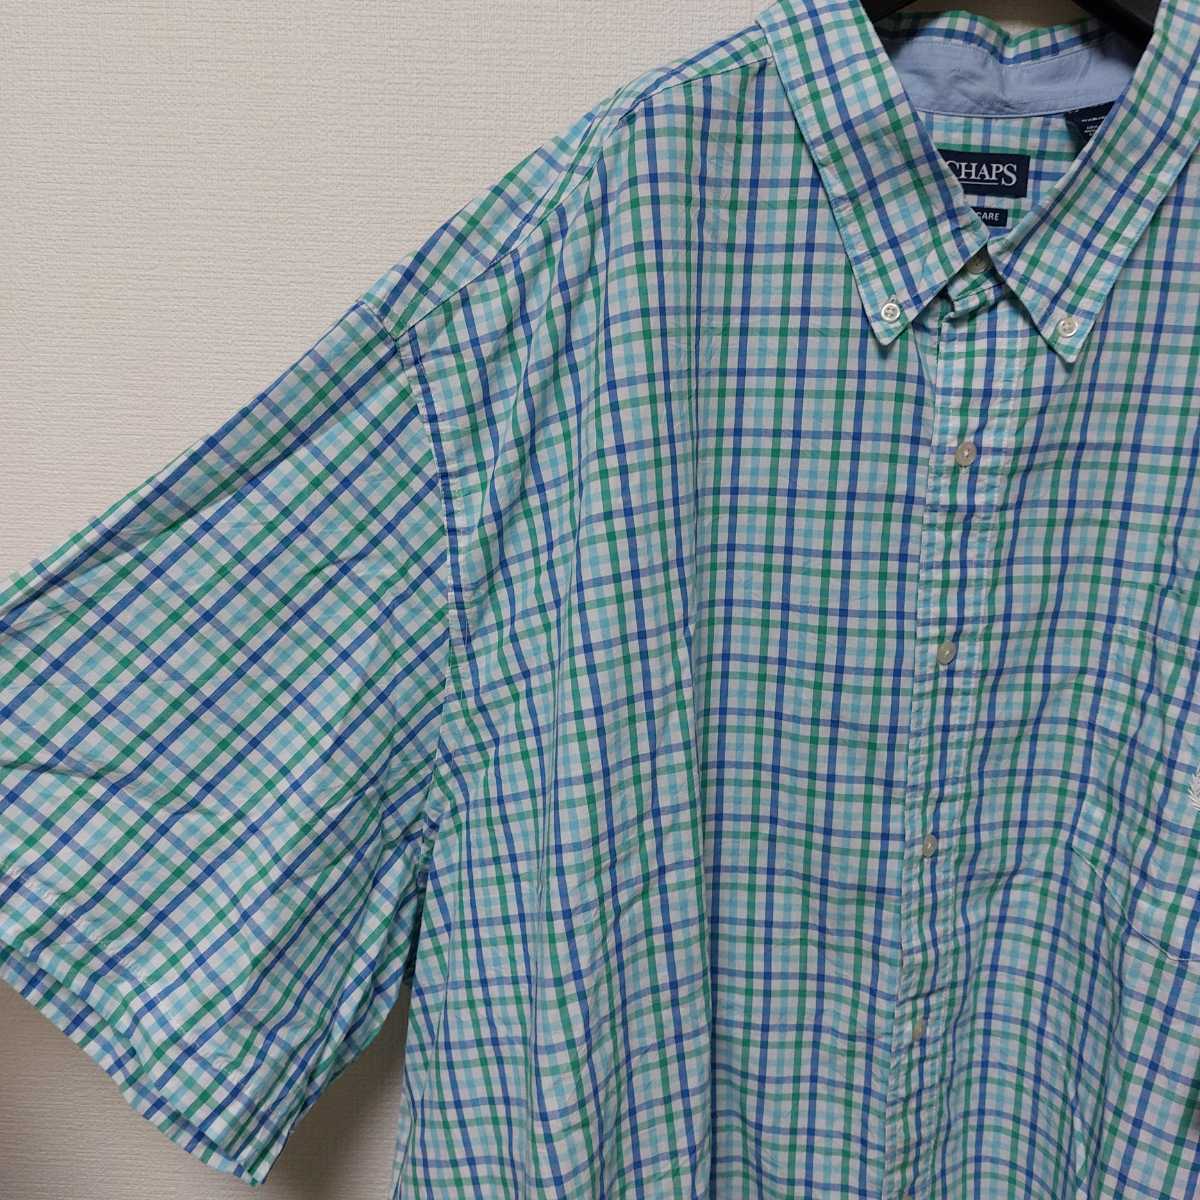 CHAPS ラルフローレン ボタンダウン チェック グリーン ブルー 青 緑 水色 半袖 シャツ 6XL オーバーサイズ 04F2308_画像3